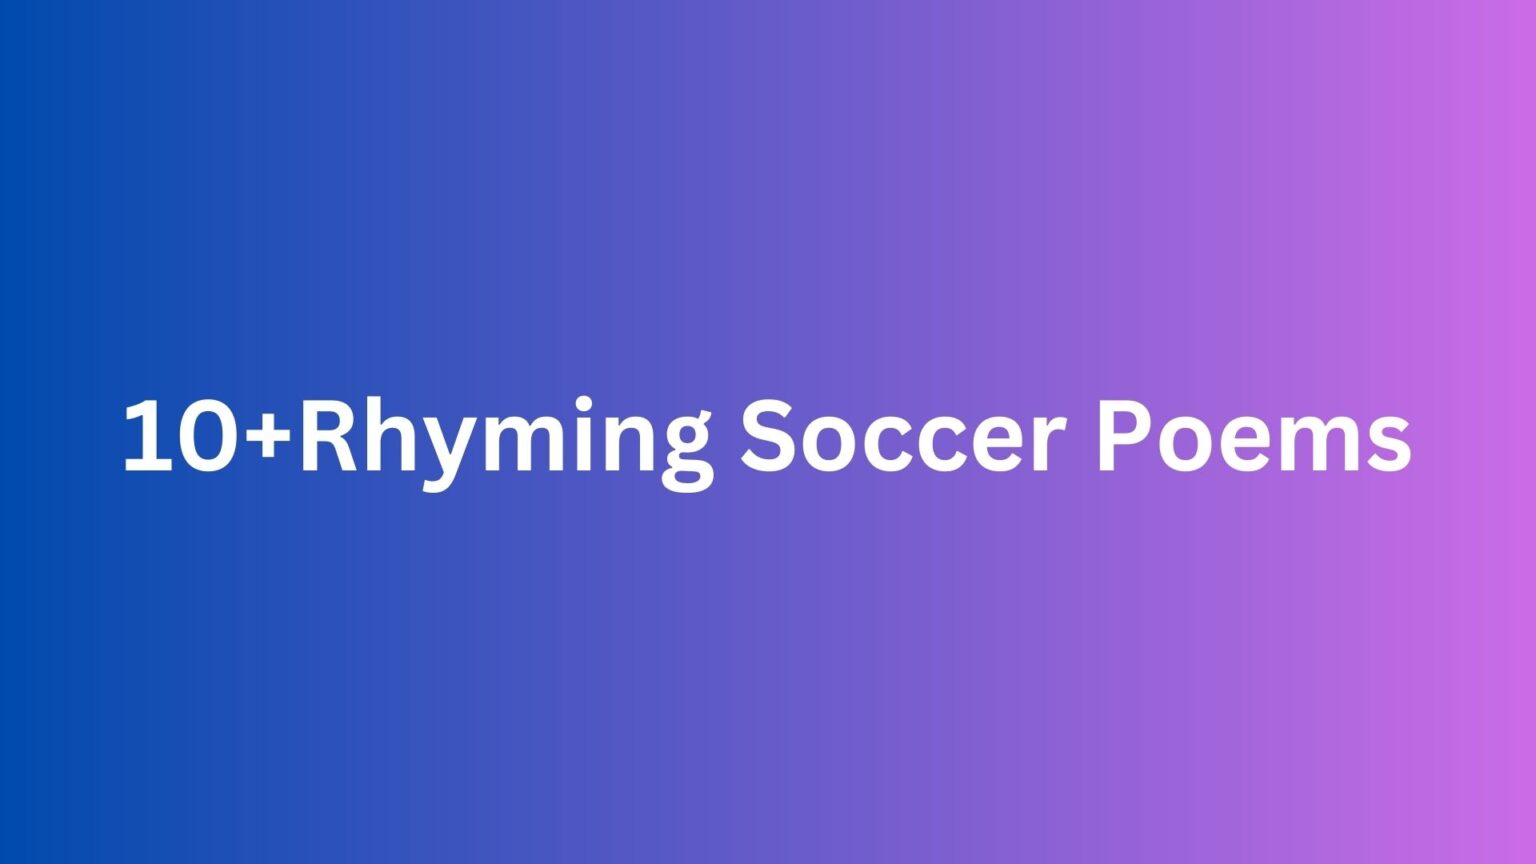 10+Rhyming Soccer Poems - Poem Source